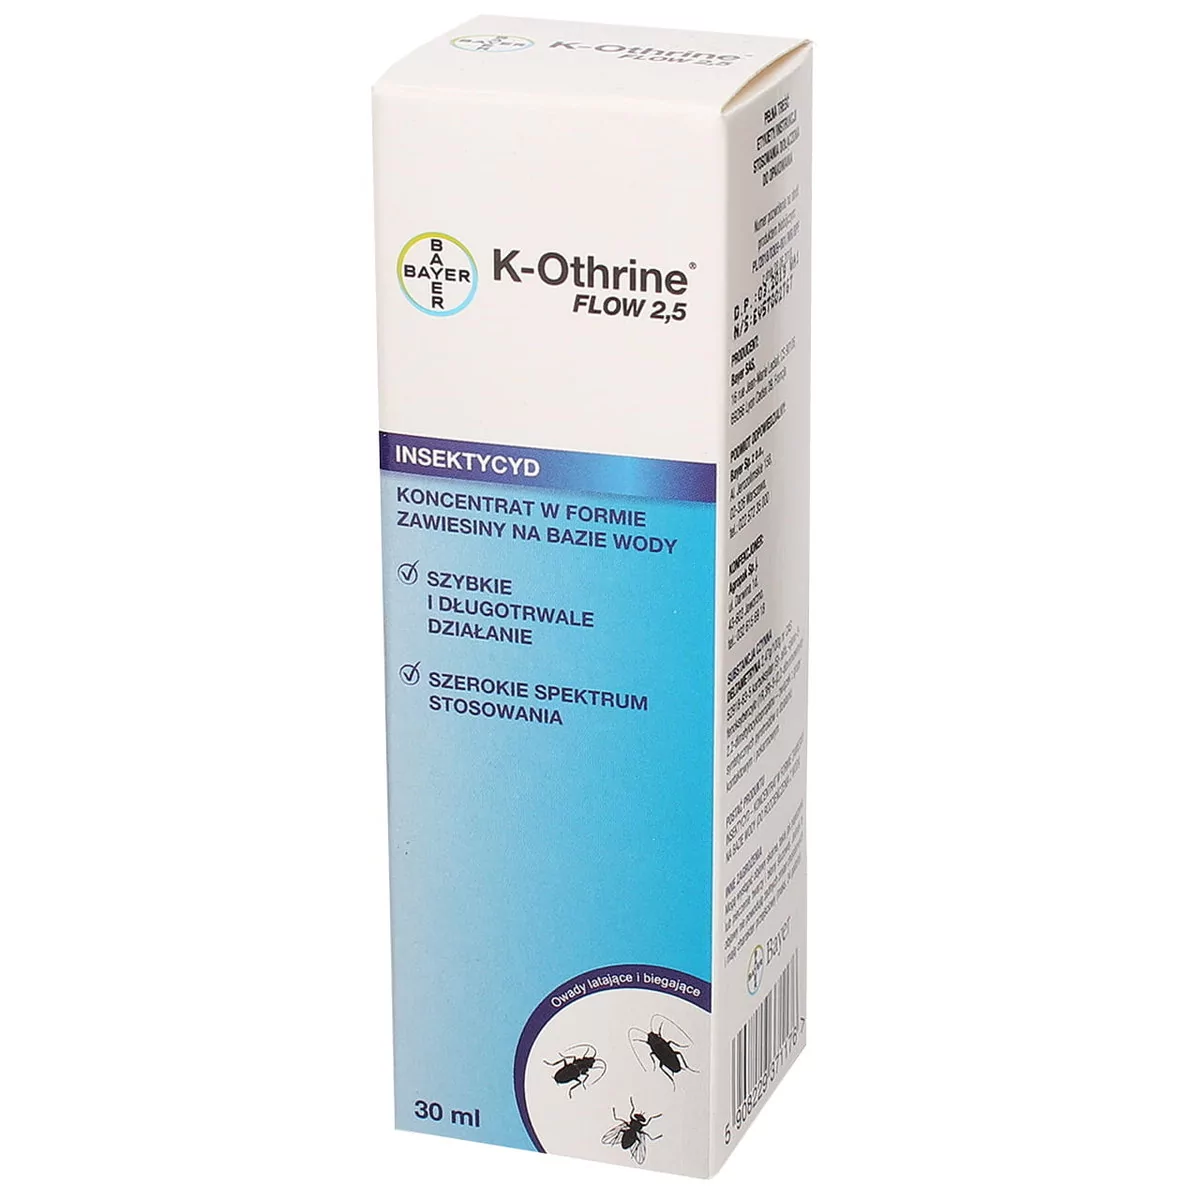 Bayer K-Othrine 2,5 Flow 30ml. Oprysk na pluskwy, komary, muchy, mrówki.